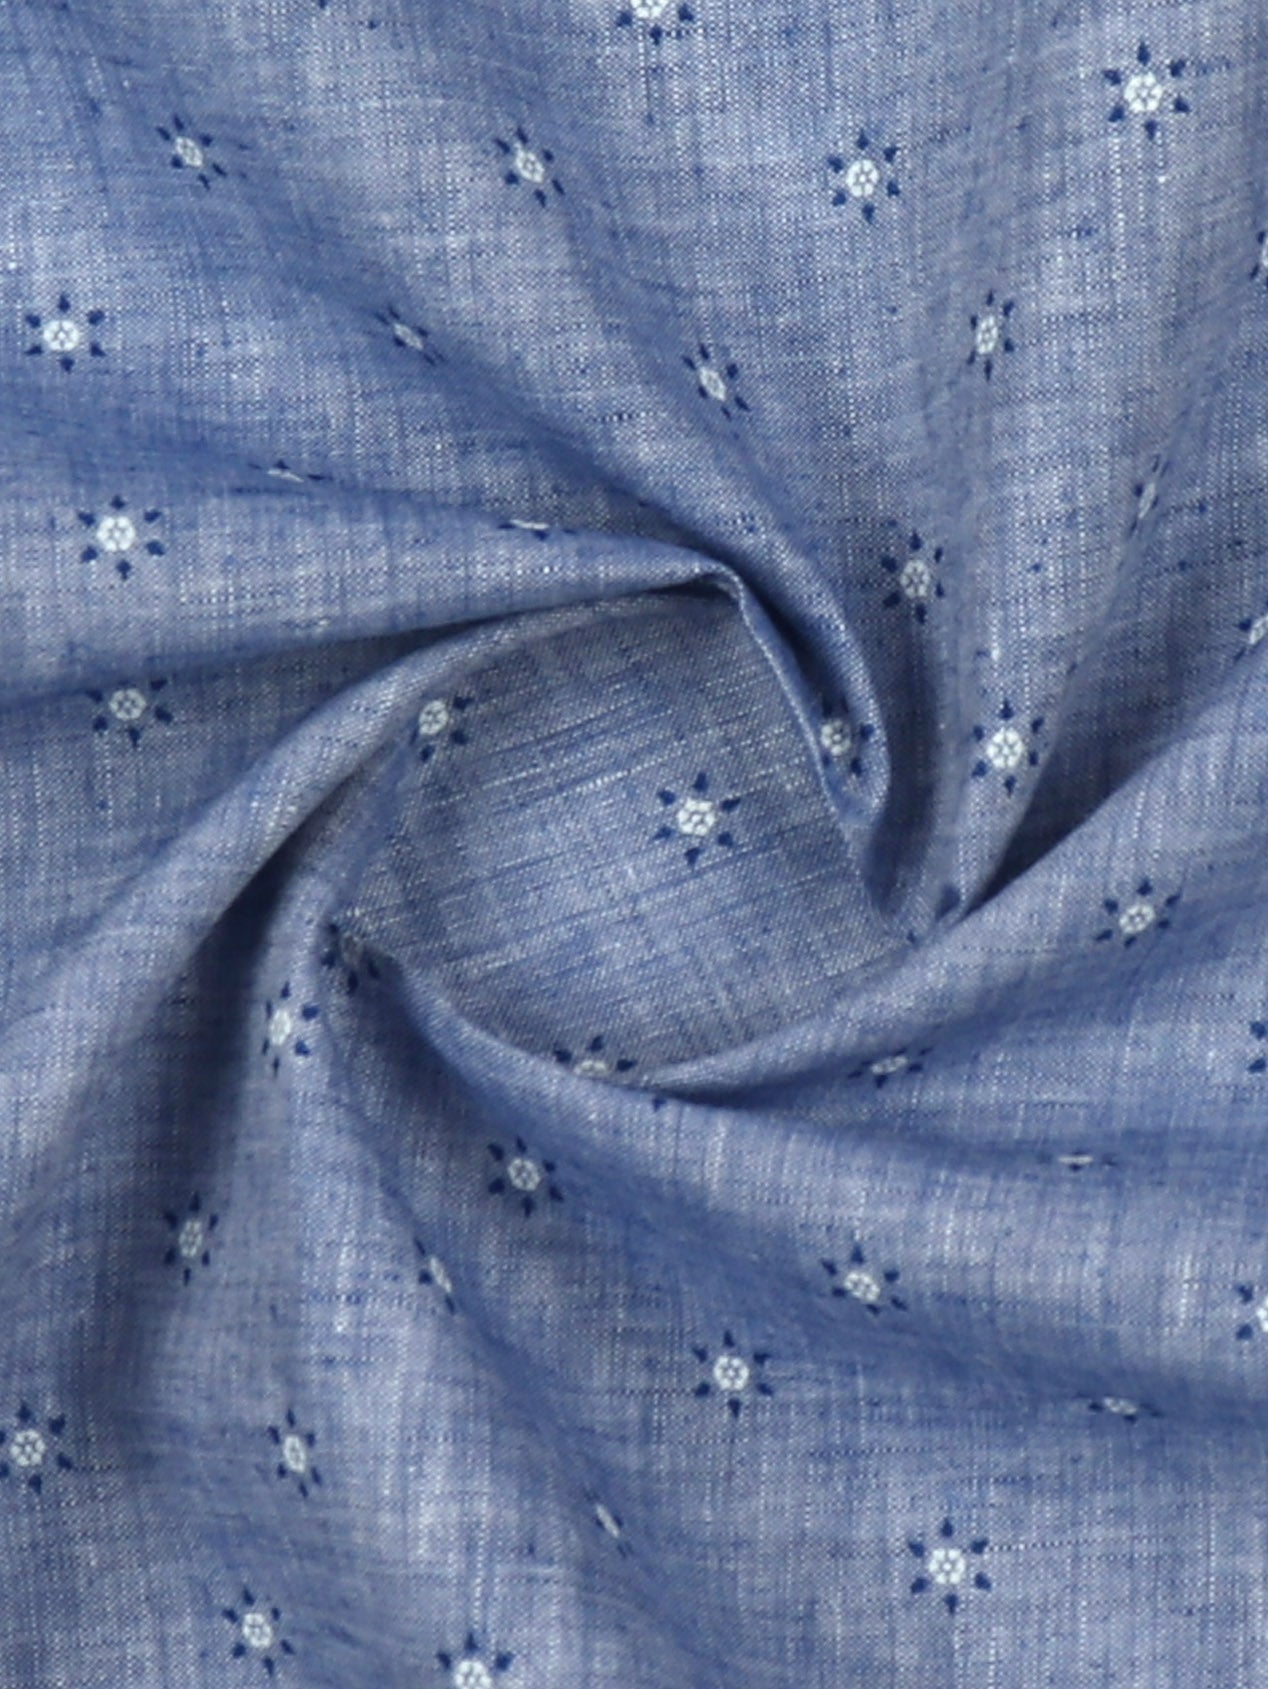 Pure  Linen Park Classic Self Design Shirt Fabric Blue